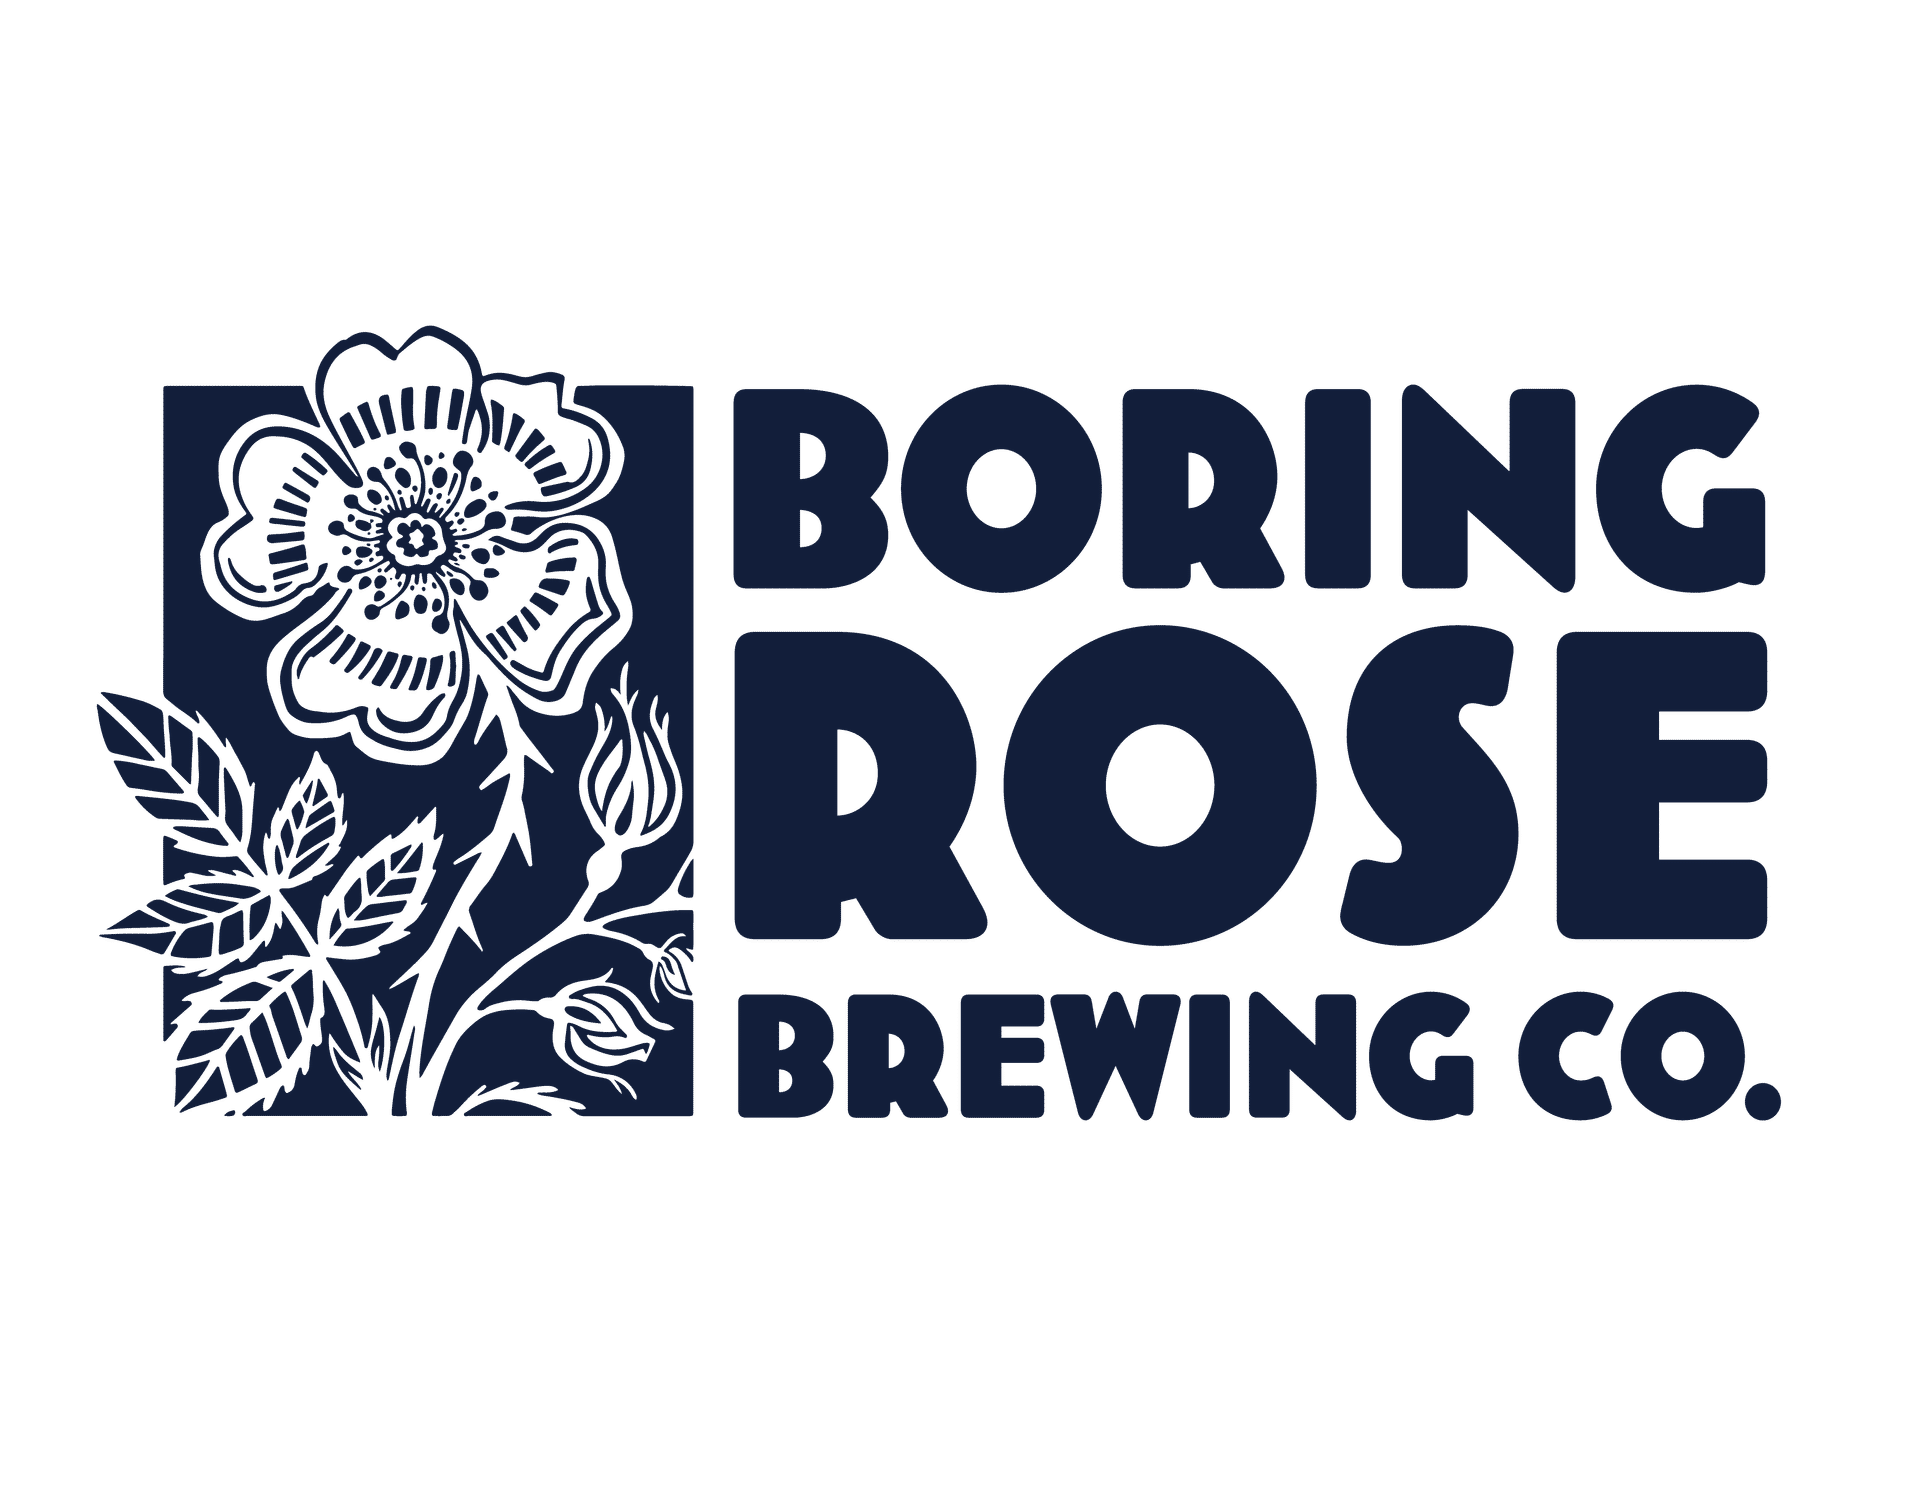 Boring Rose Brewing Co.